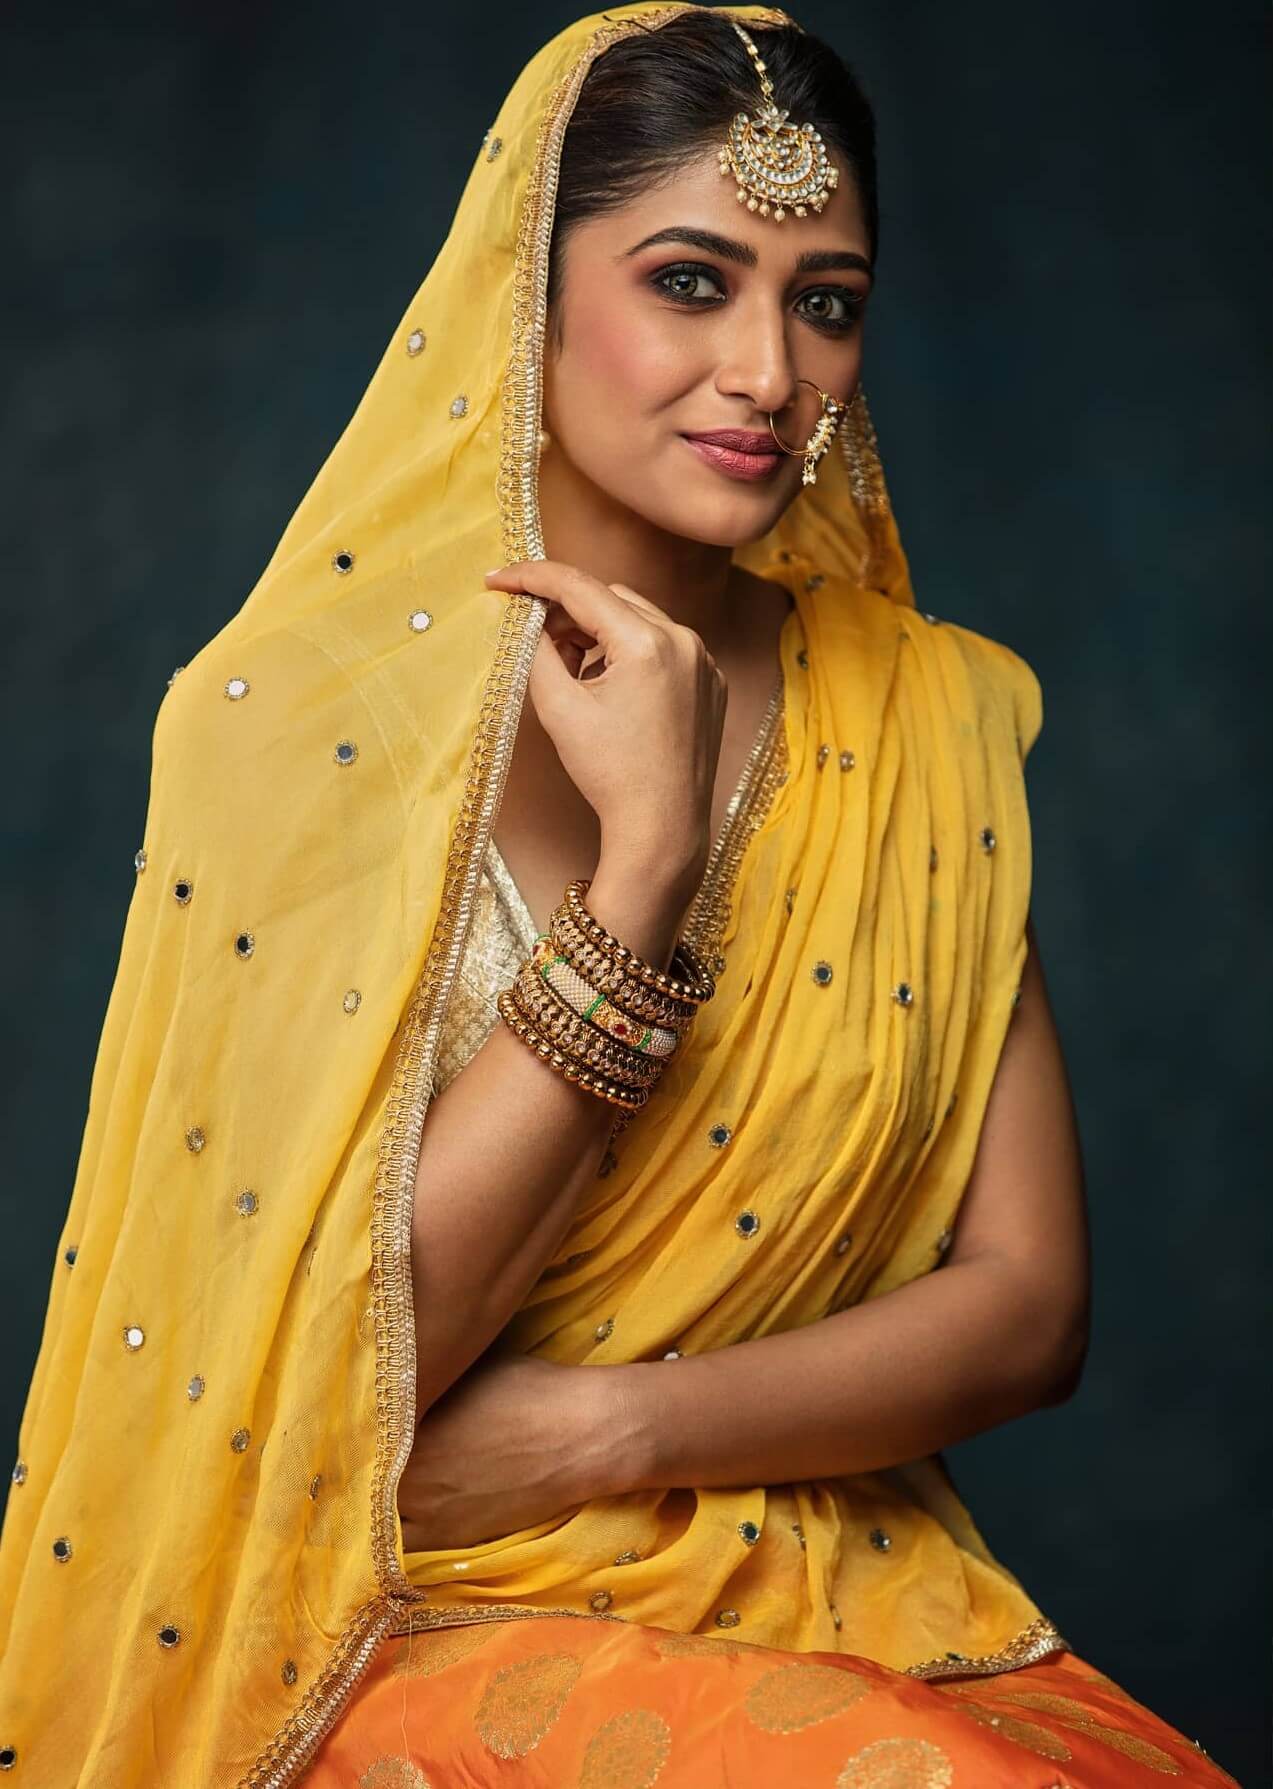 Roshni Prakash Look Beautiful In Traditional Attire Outfit Looks